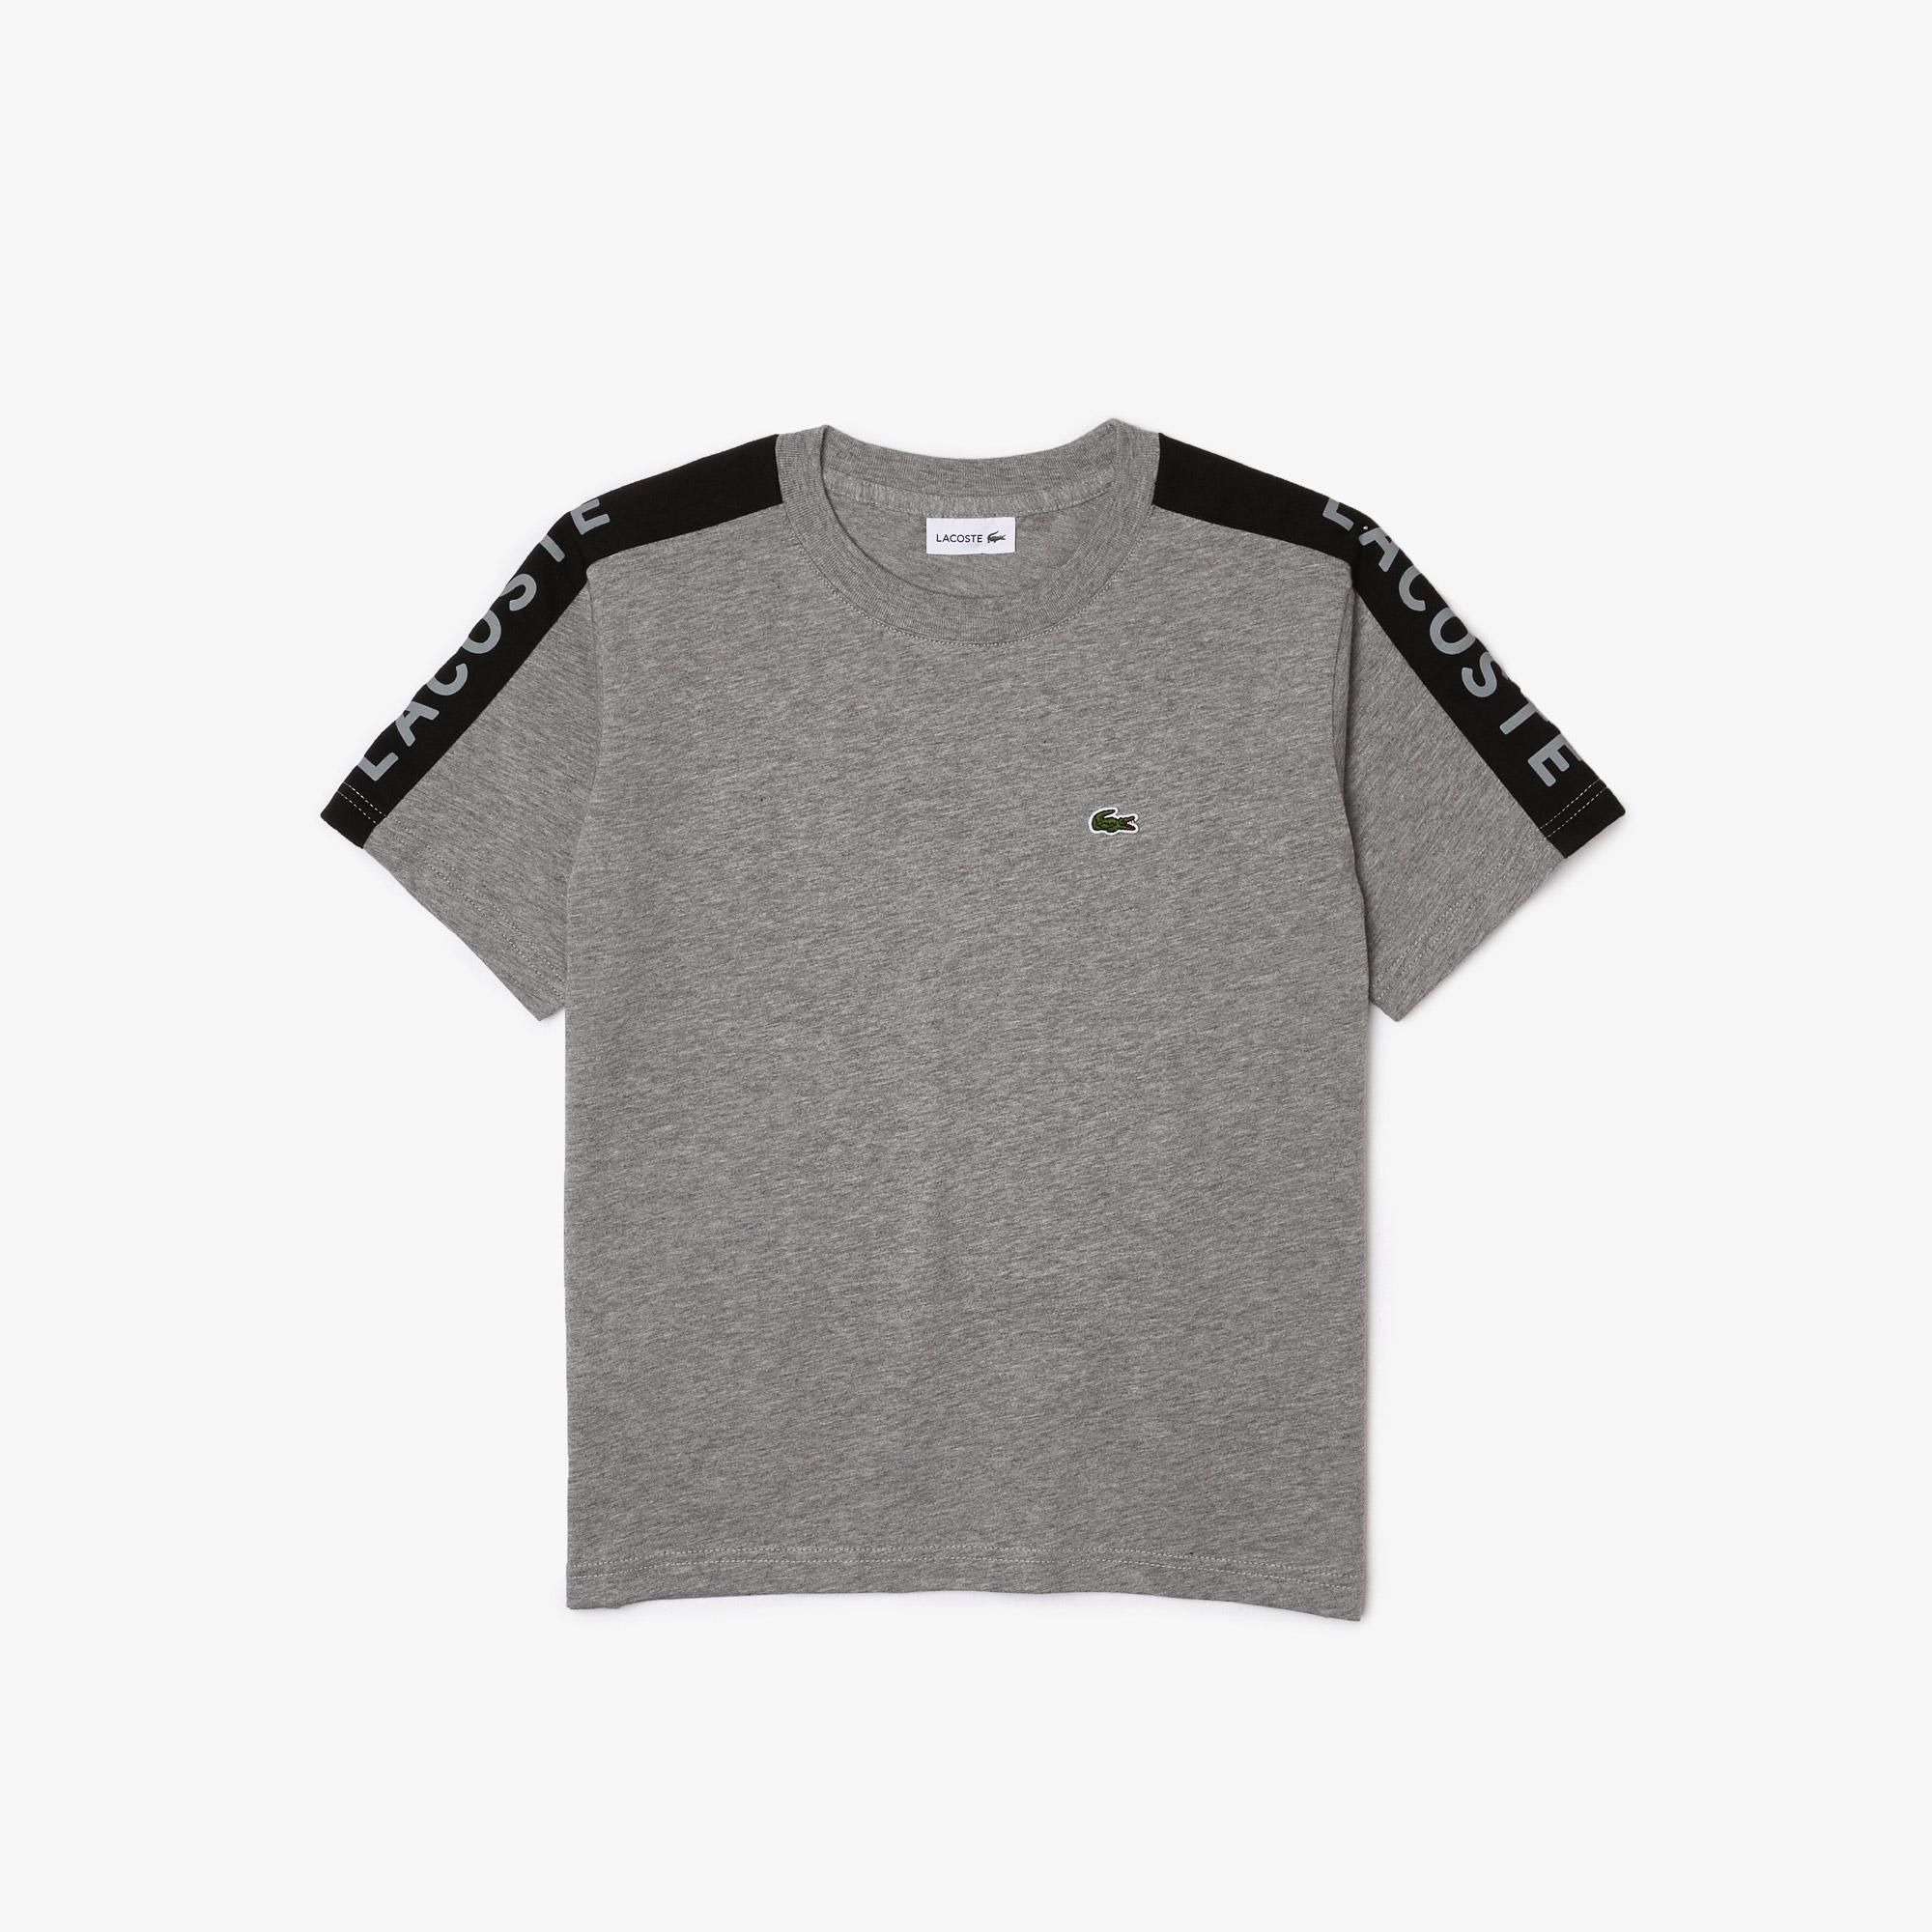 Lacoste Boys’ Crew Neck Lettered Bands Cotton T-shirt